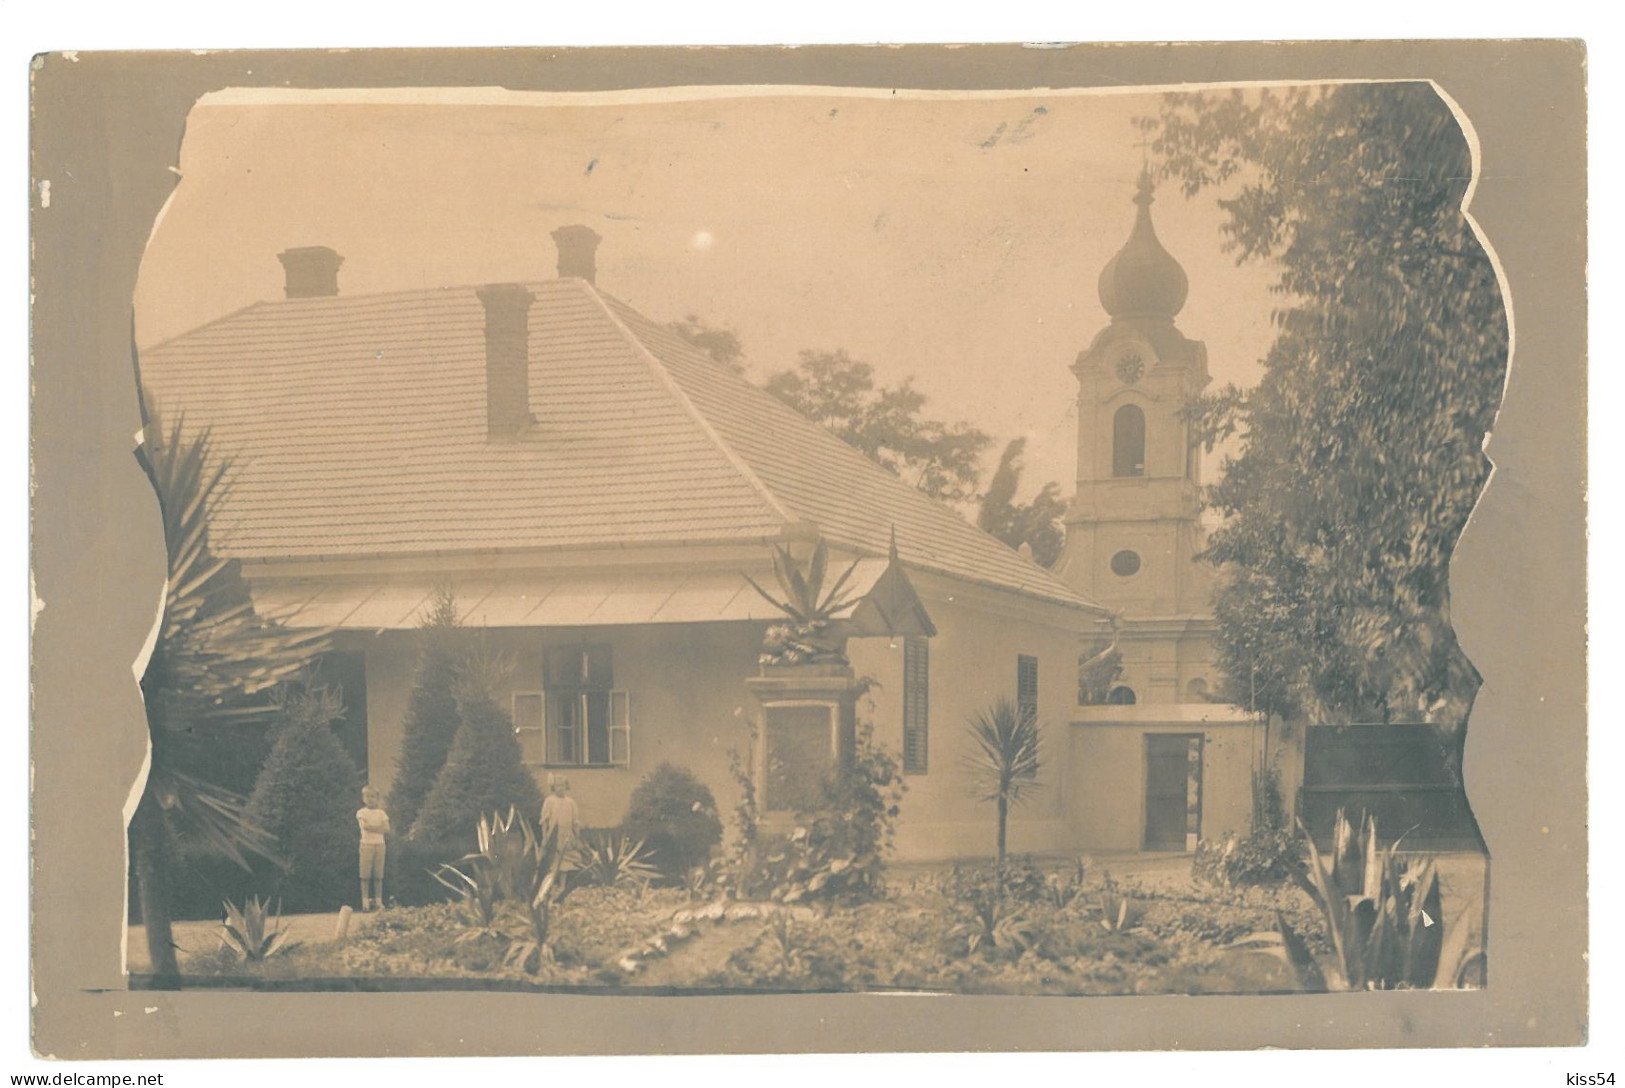 RO 36 - 16751 CHISINAU-CRIS, Bihor, Romania - Old Postcard - Used - 1912 - Romania